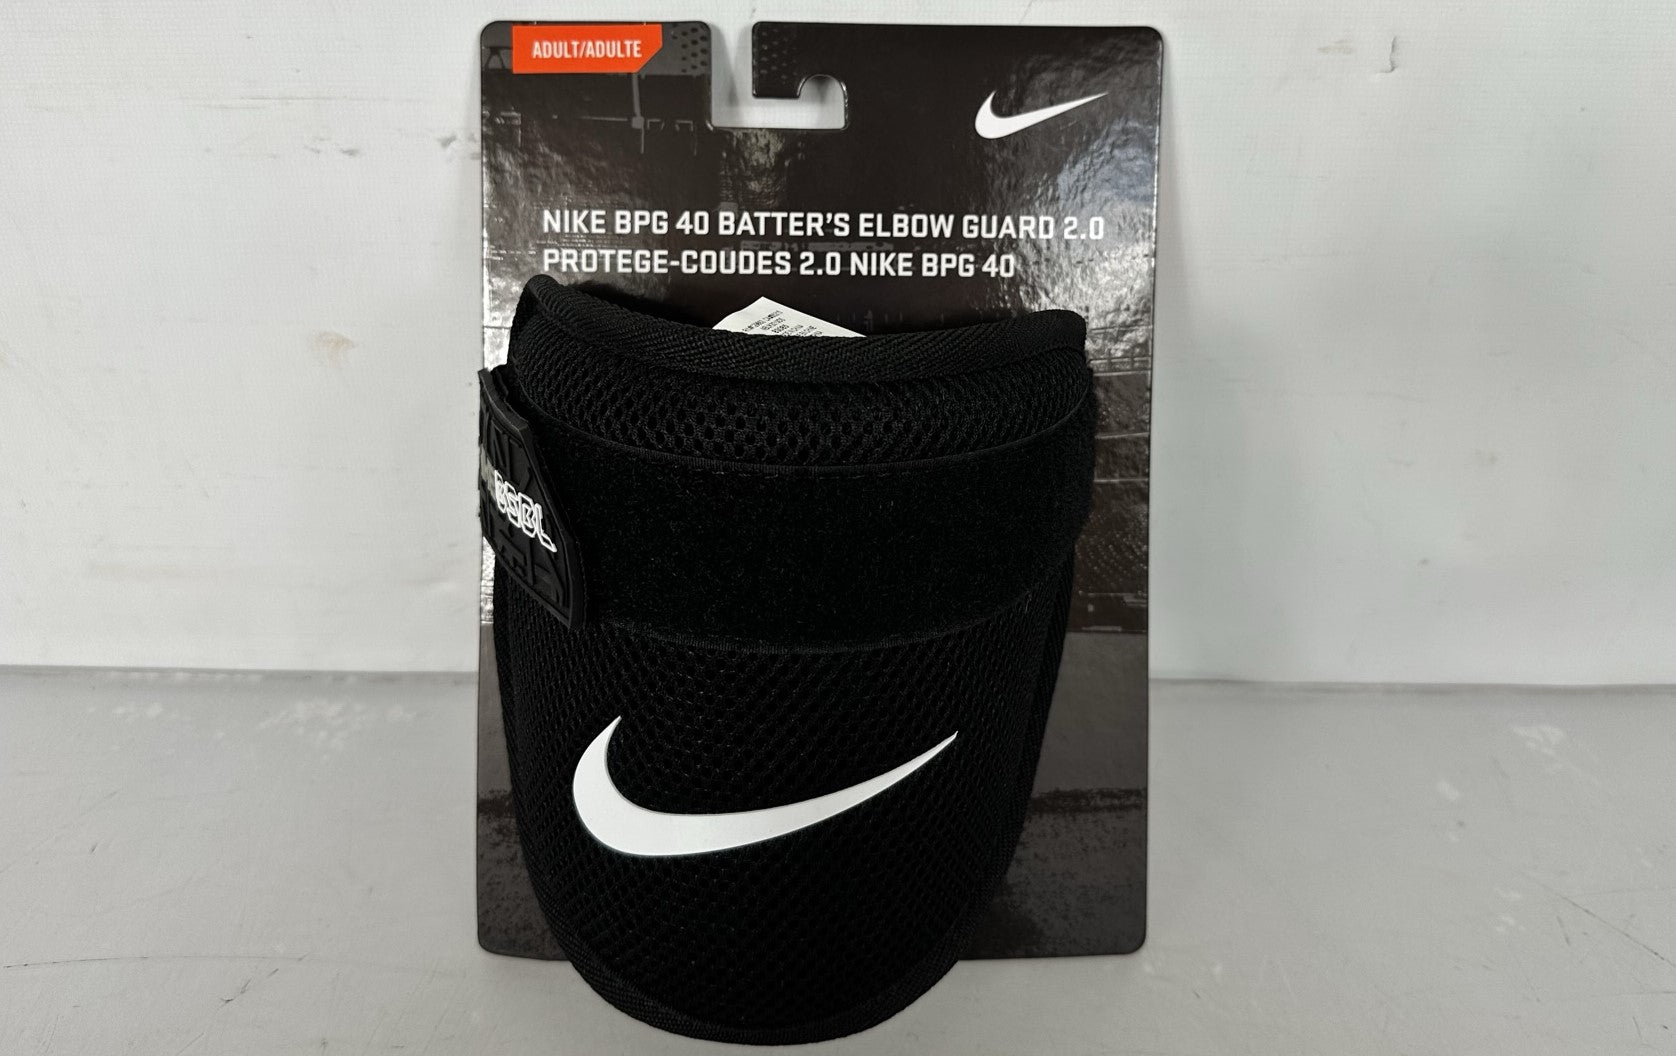 Nike Black BPG 40 Adult Batter's Elbow Guard 2.0 *New*